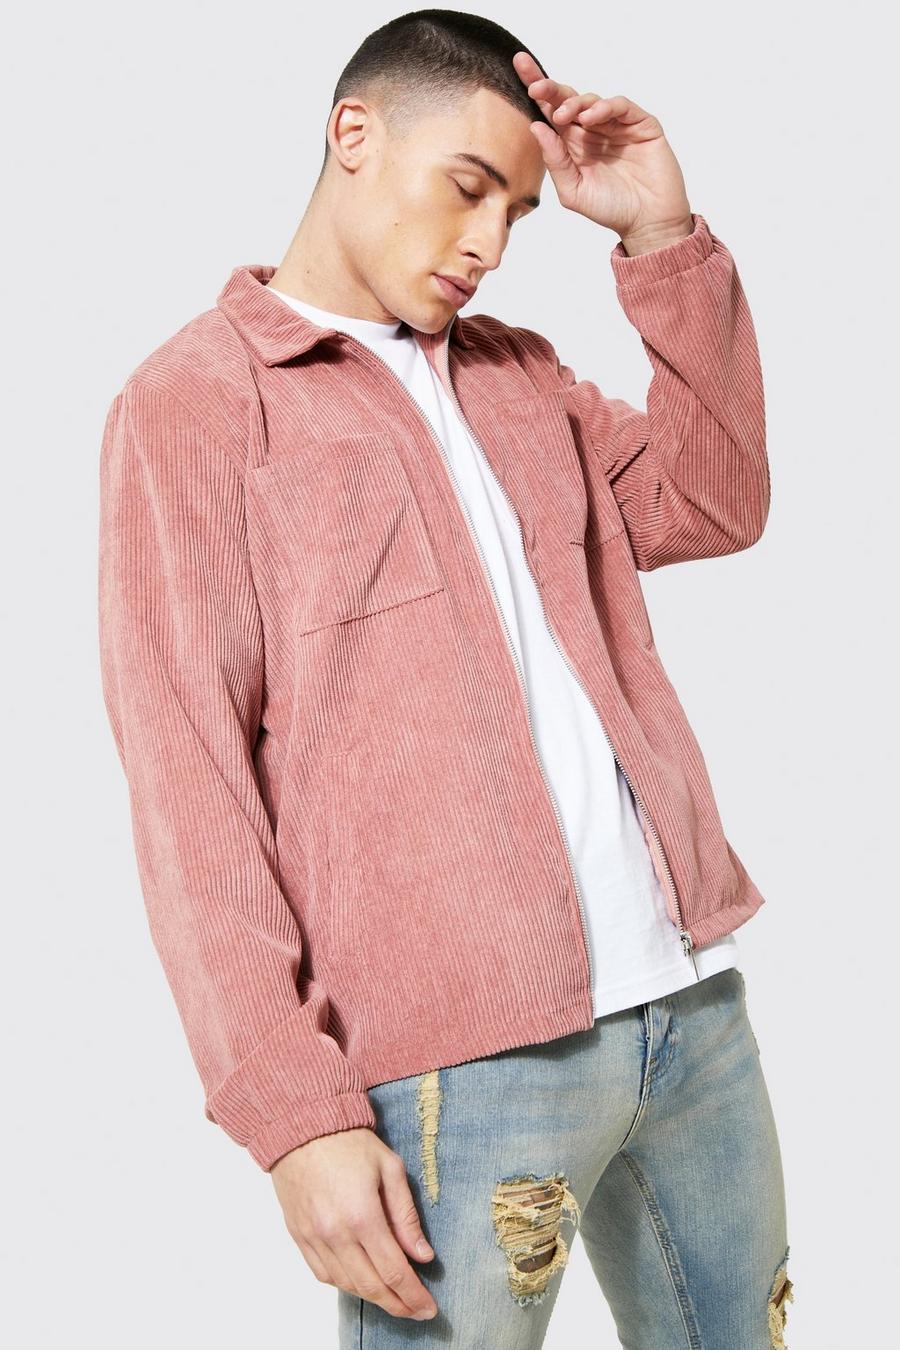 Cord Harrington-Jacke mit Taschen, Dusty pink